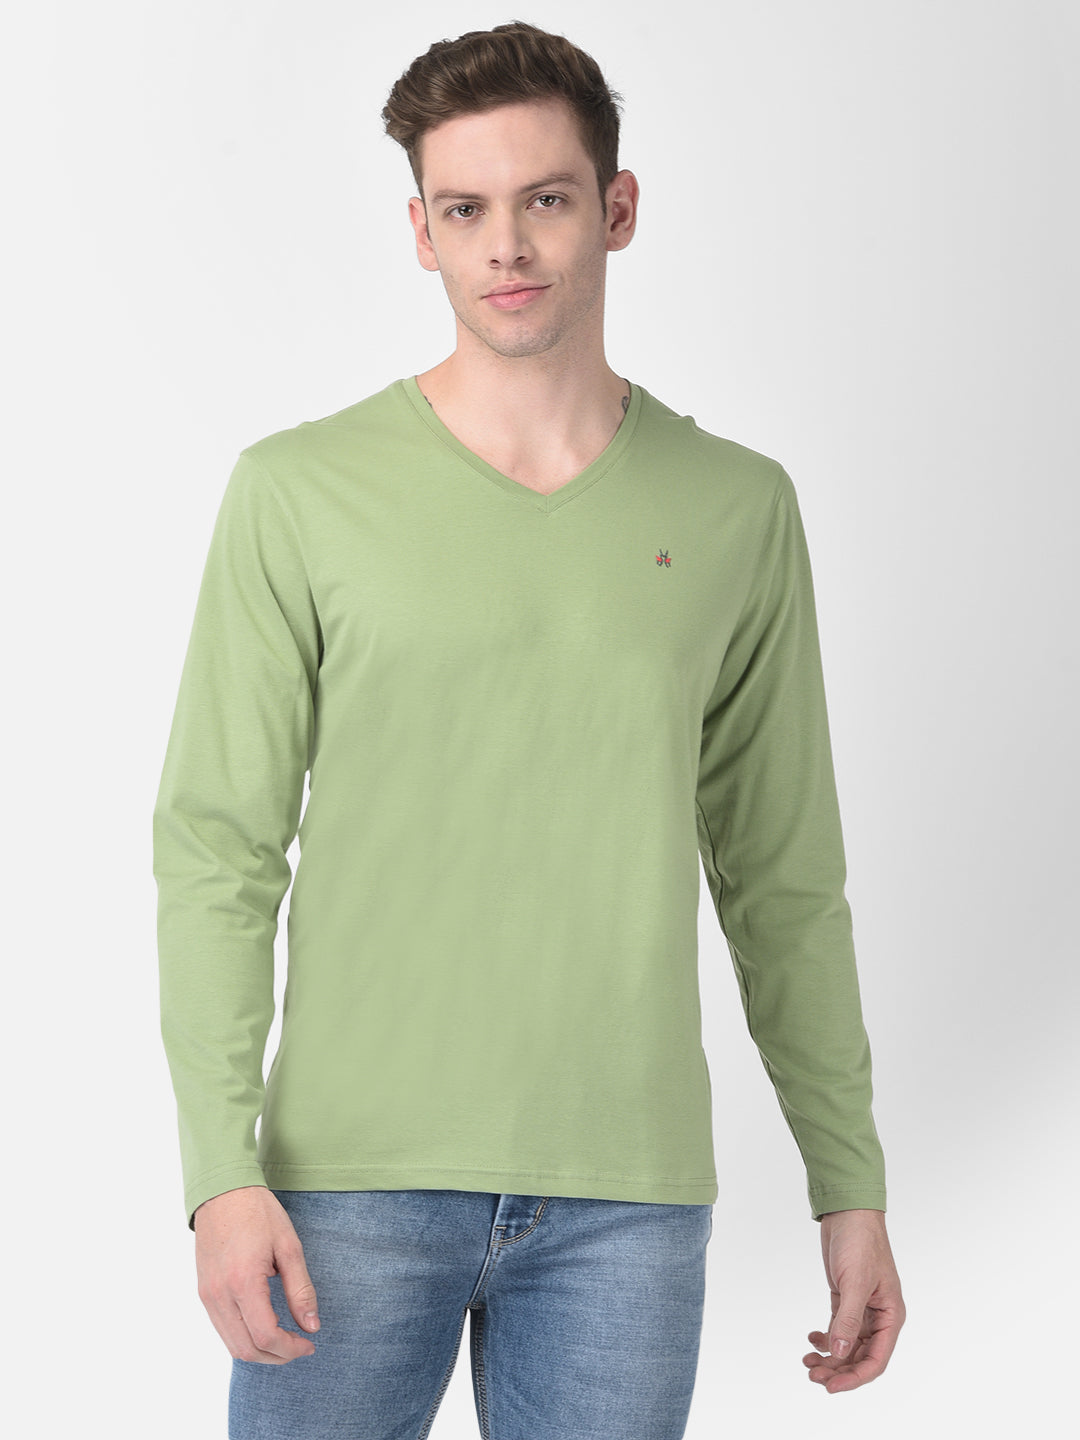 Long-Sleeved Green T-Shirt-Men T-Shirts-Crimsoune Club